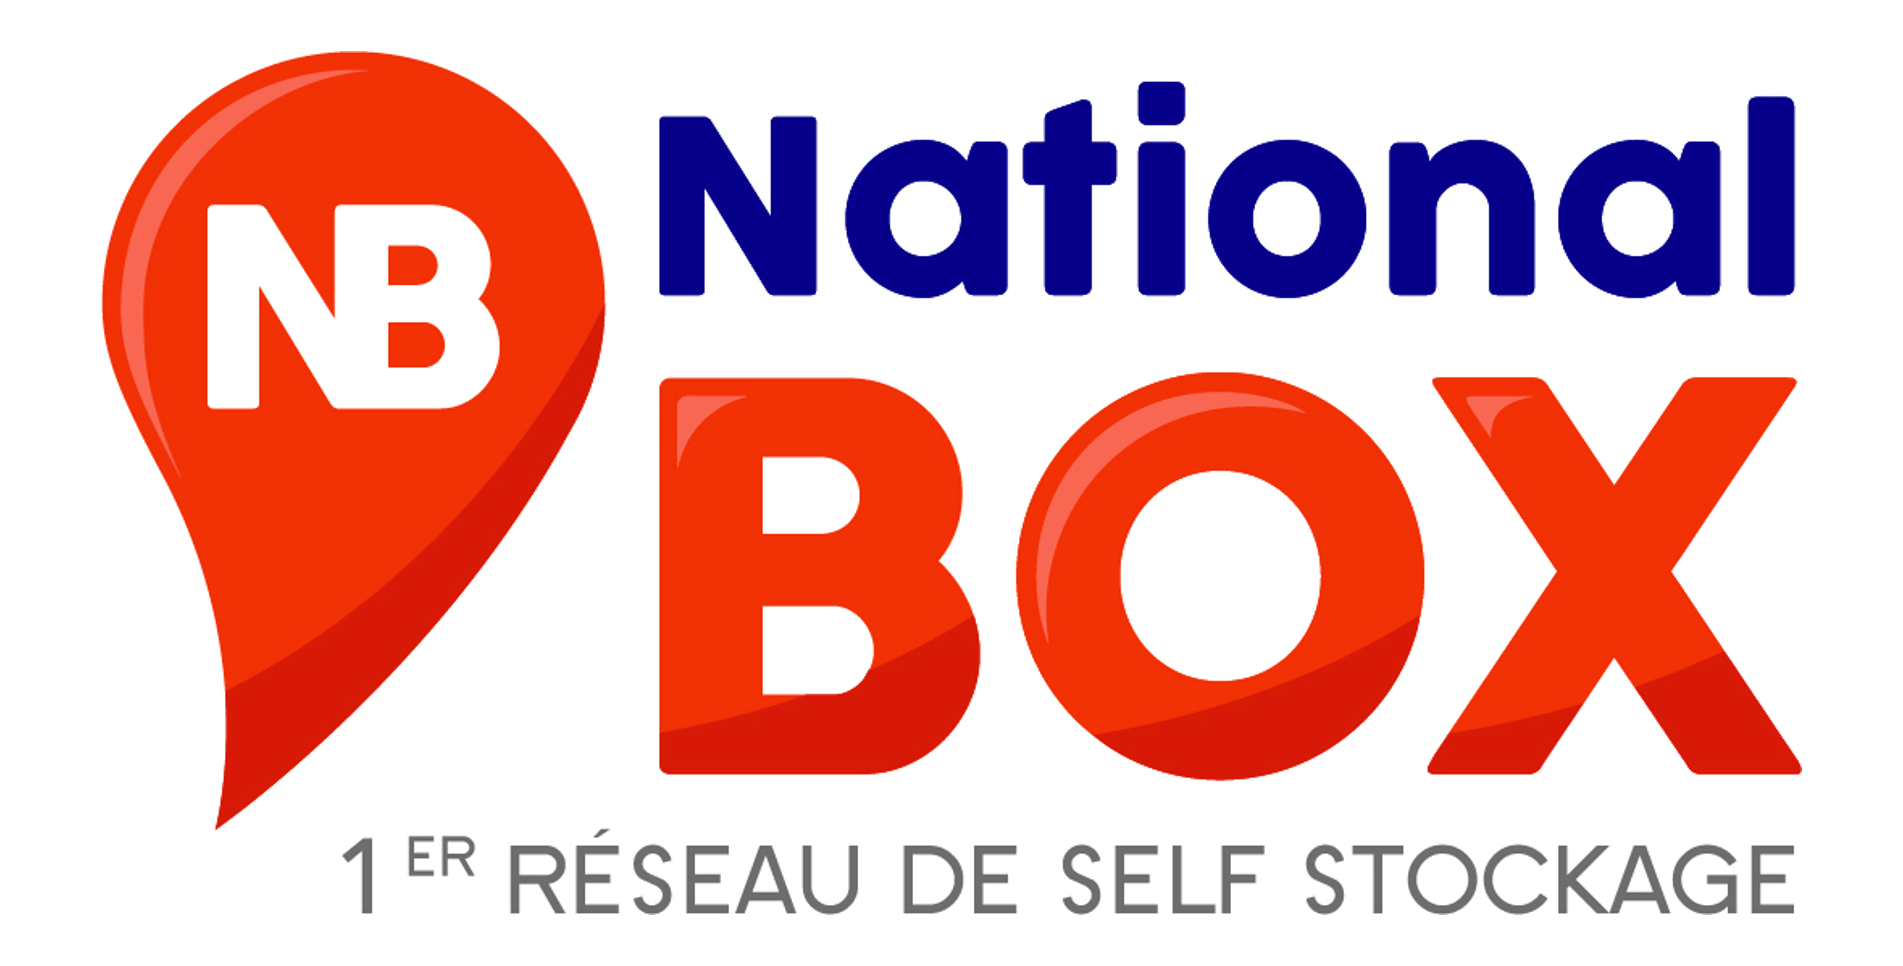 National Box